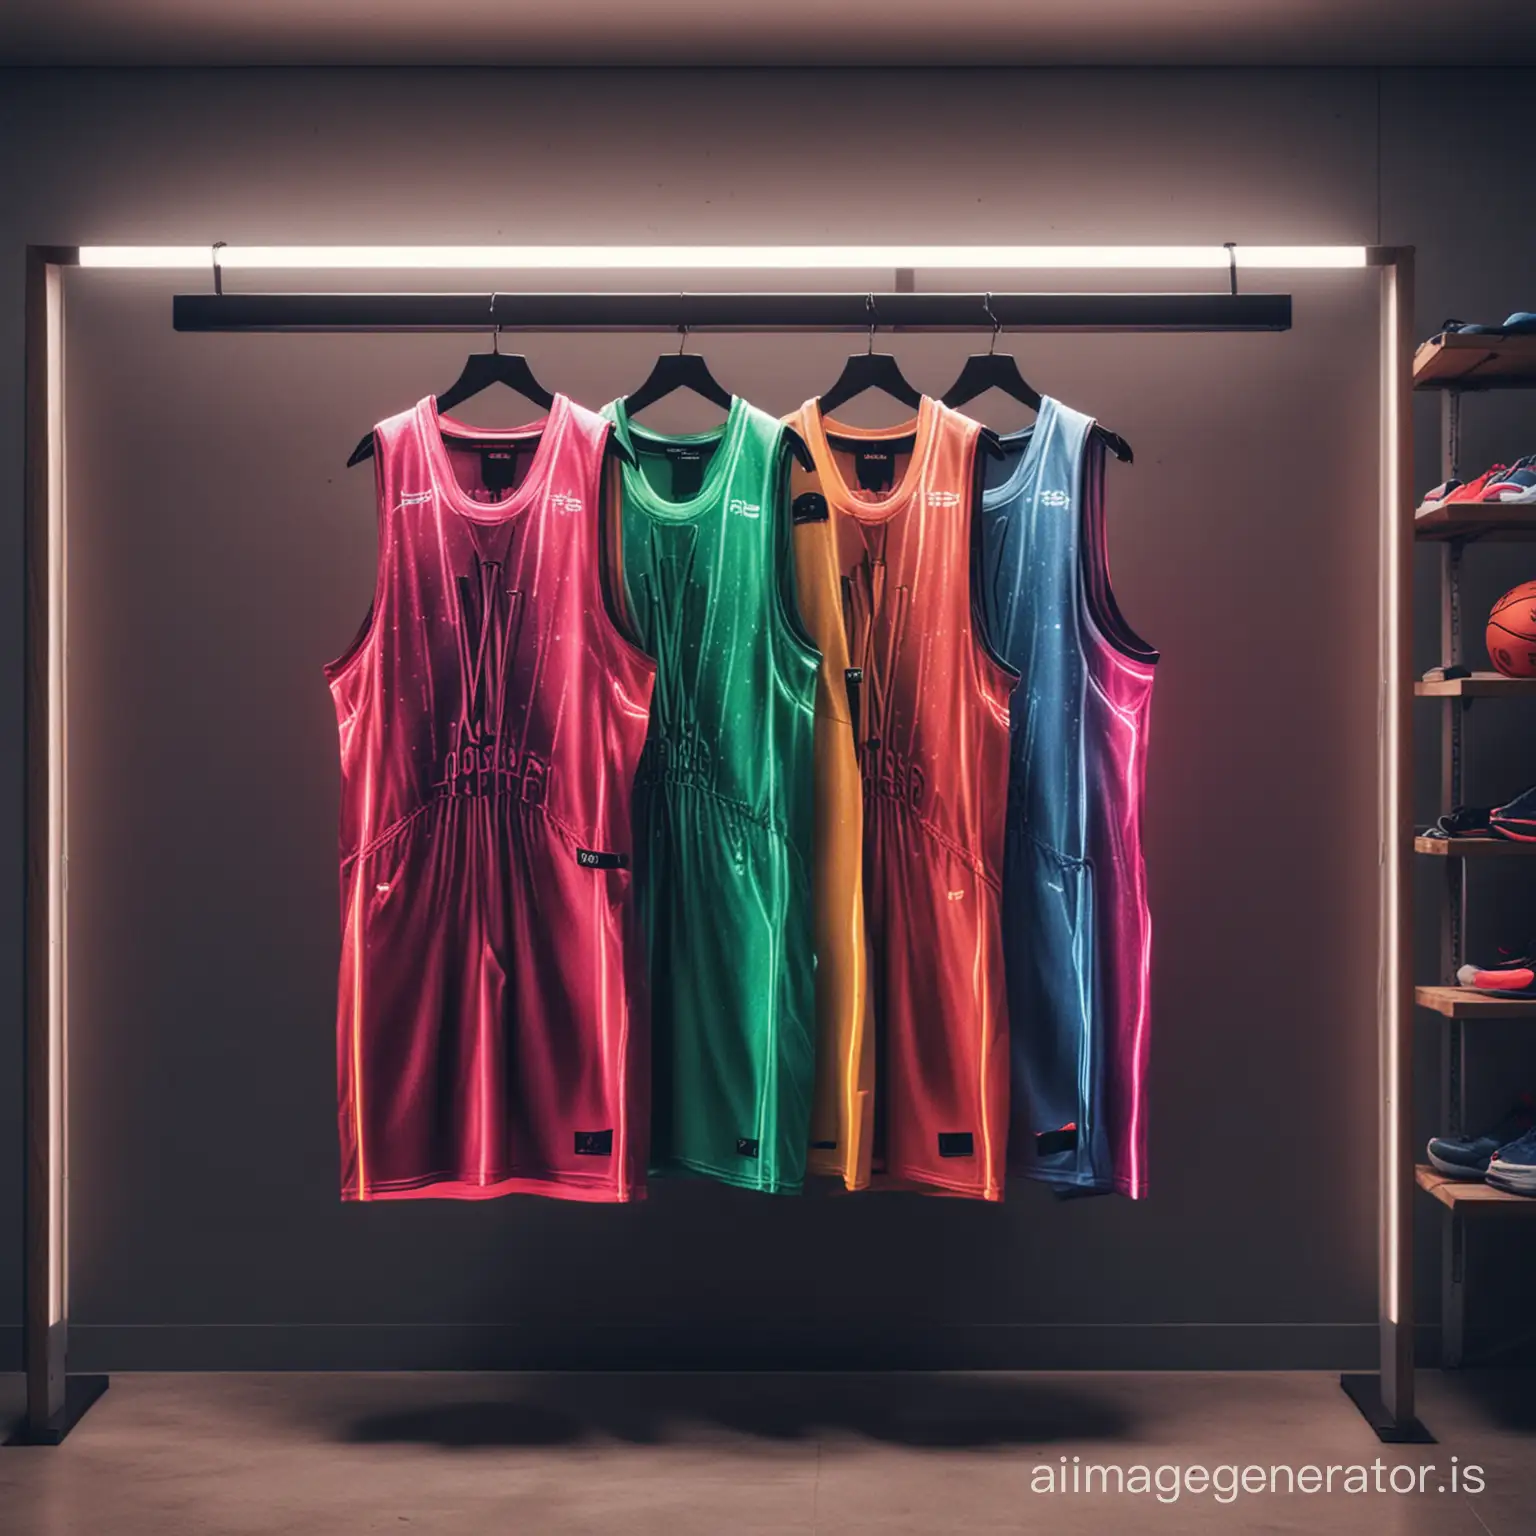 futuristic neon basketball jerseys in closet on hanger